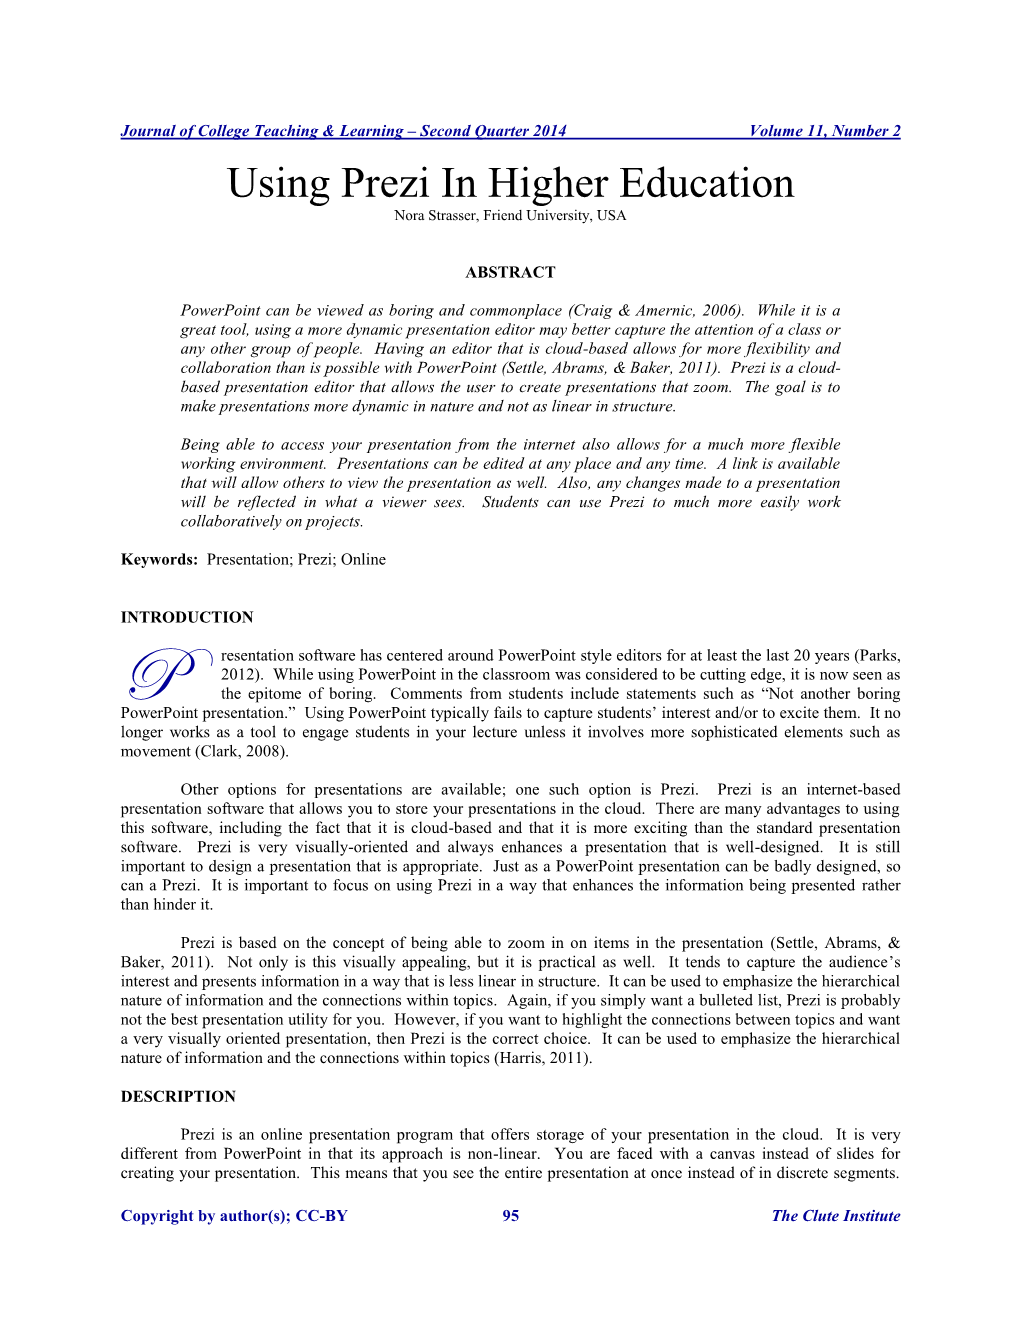 Using Prezi in Higher Education Nora Strasser, Friend University, USA